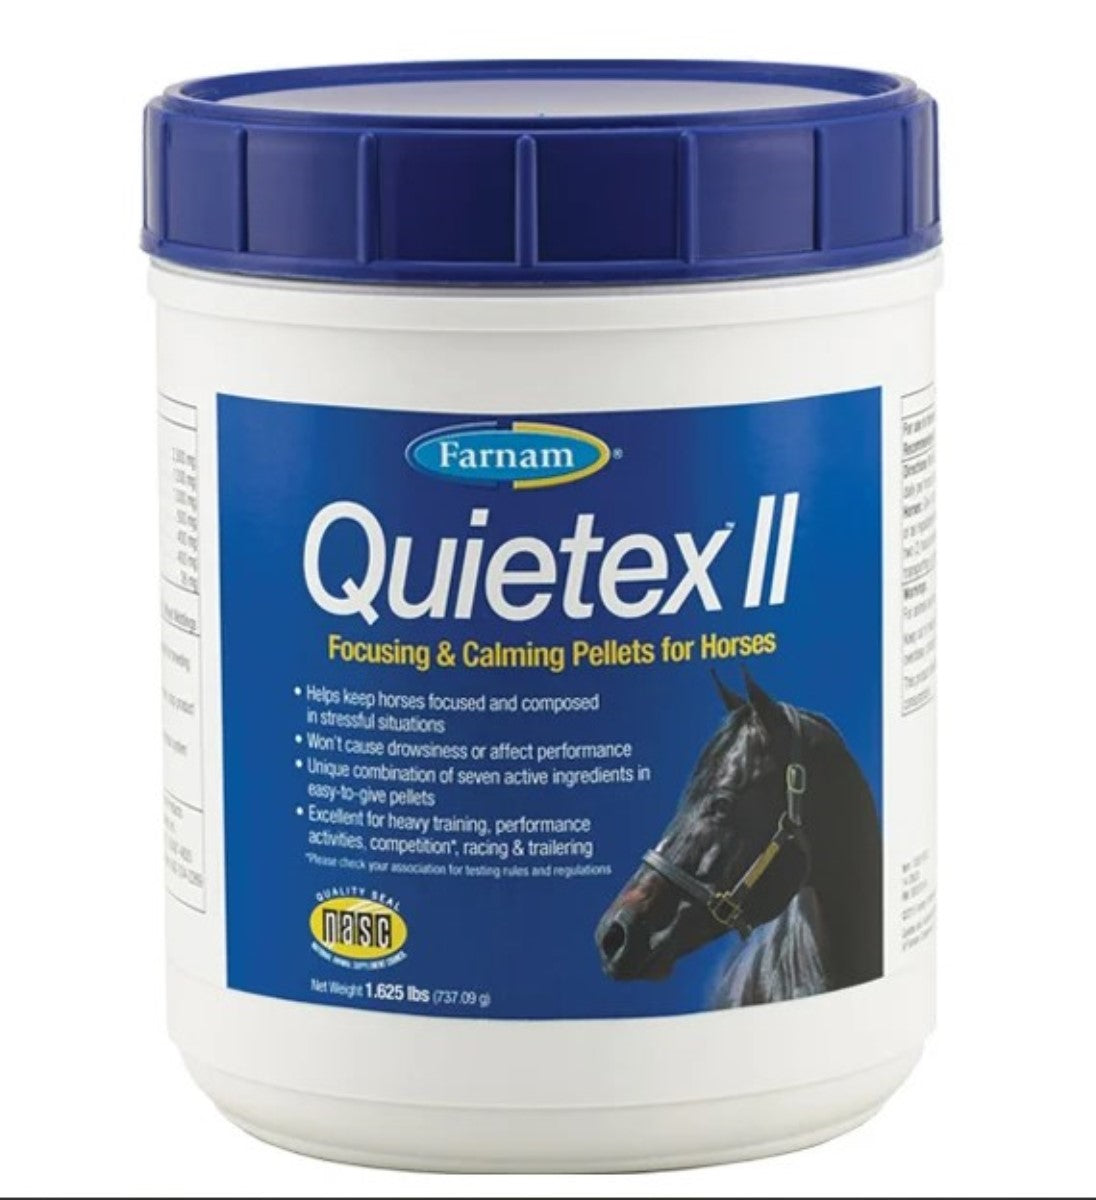 Farnam Quietex II Pellet 1.625 lb